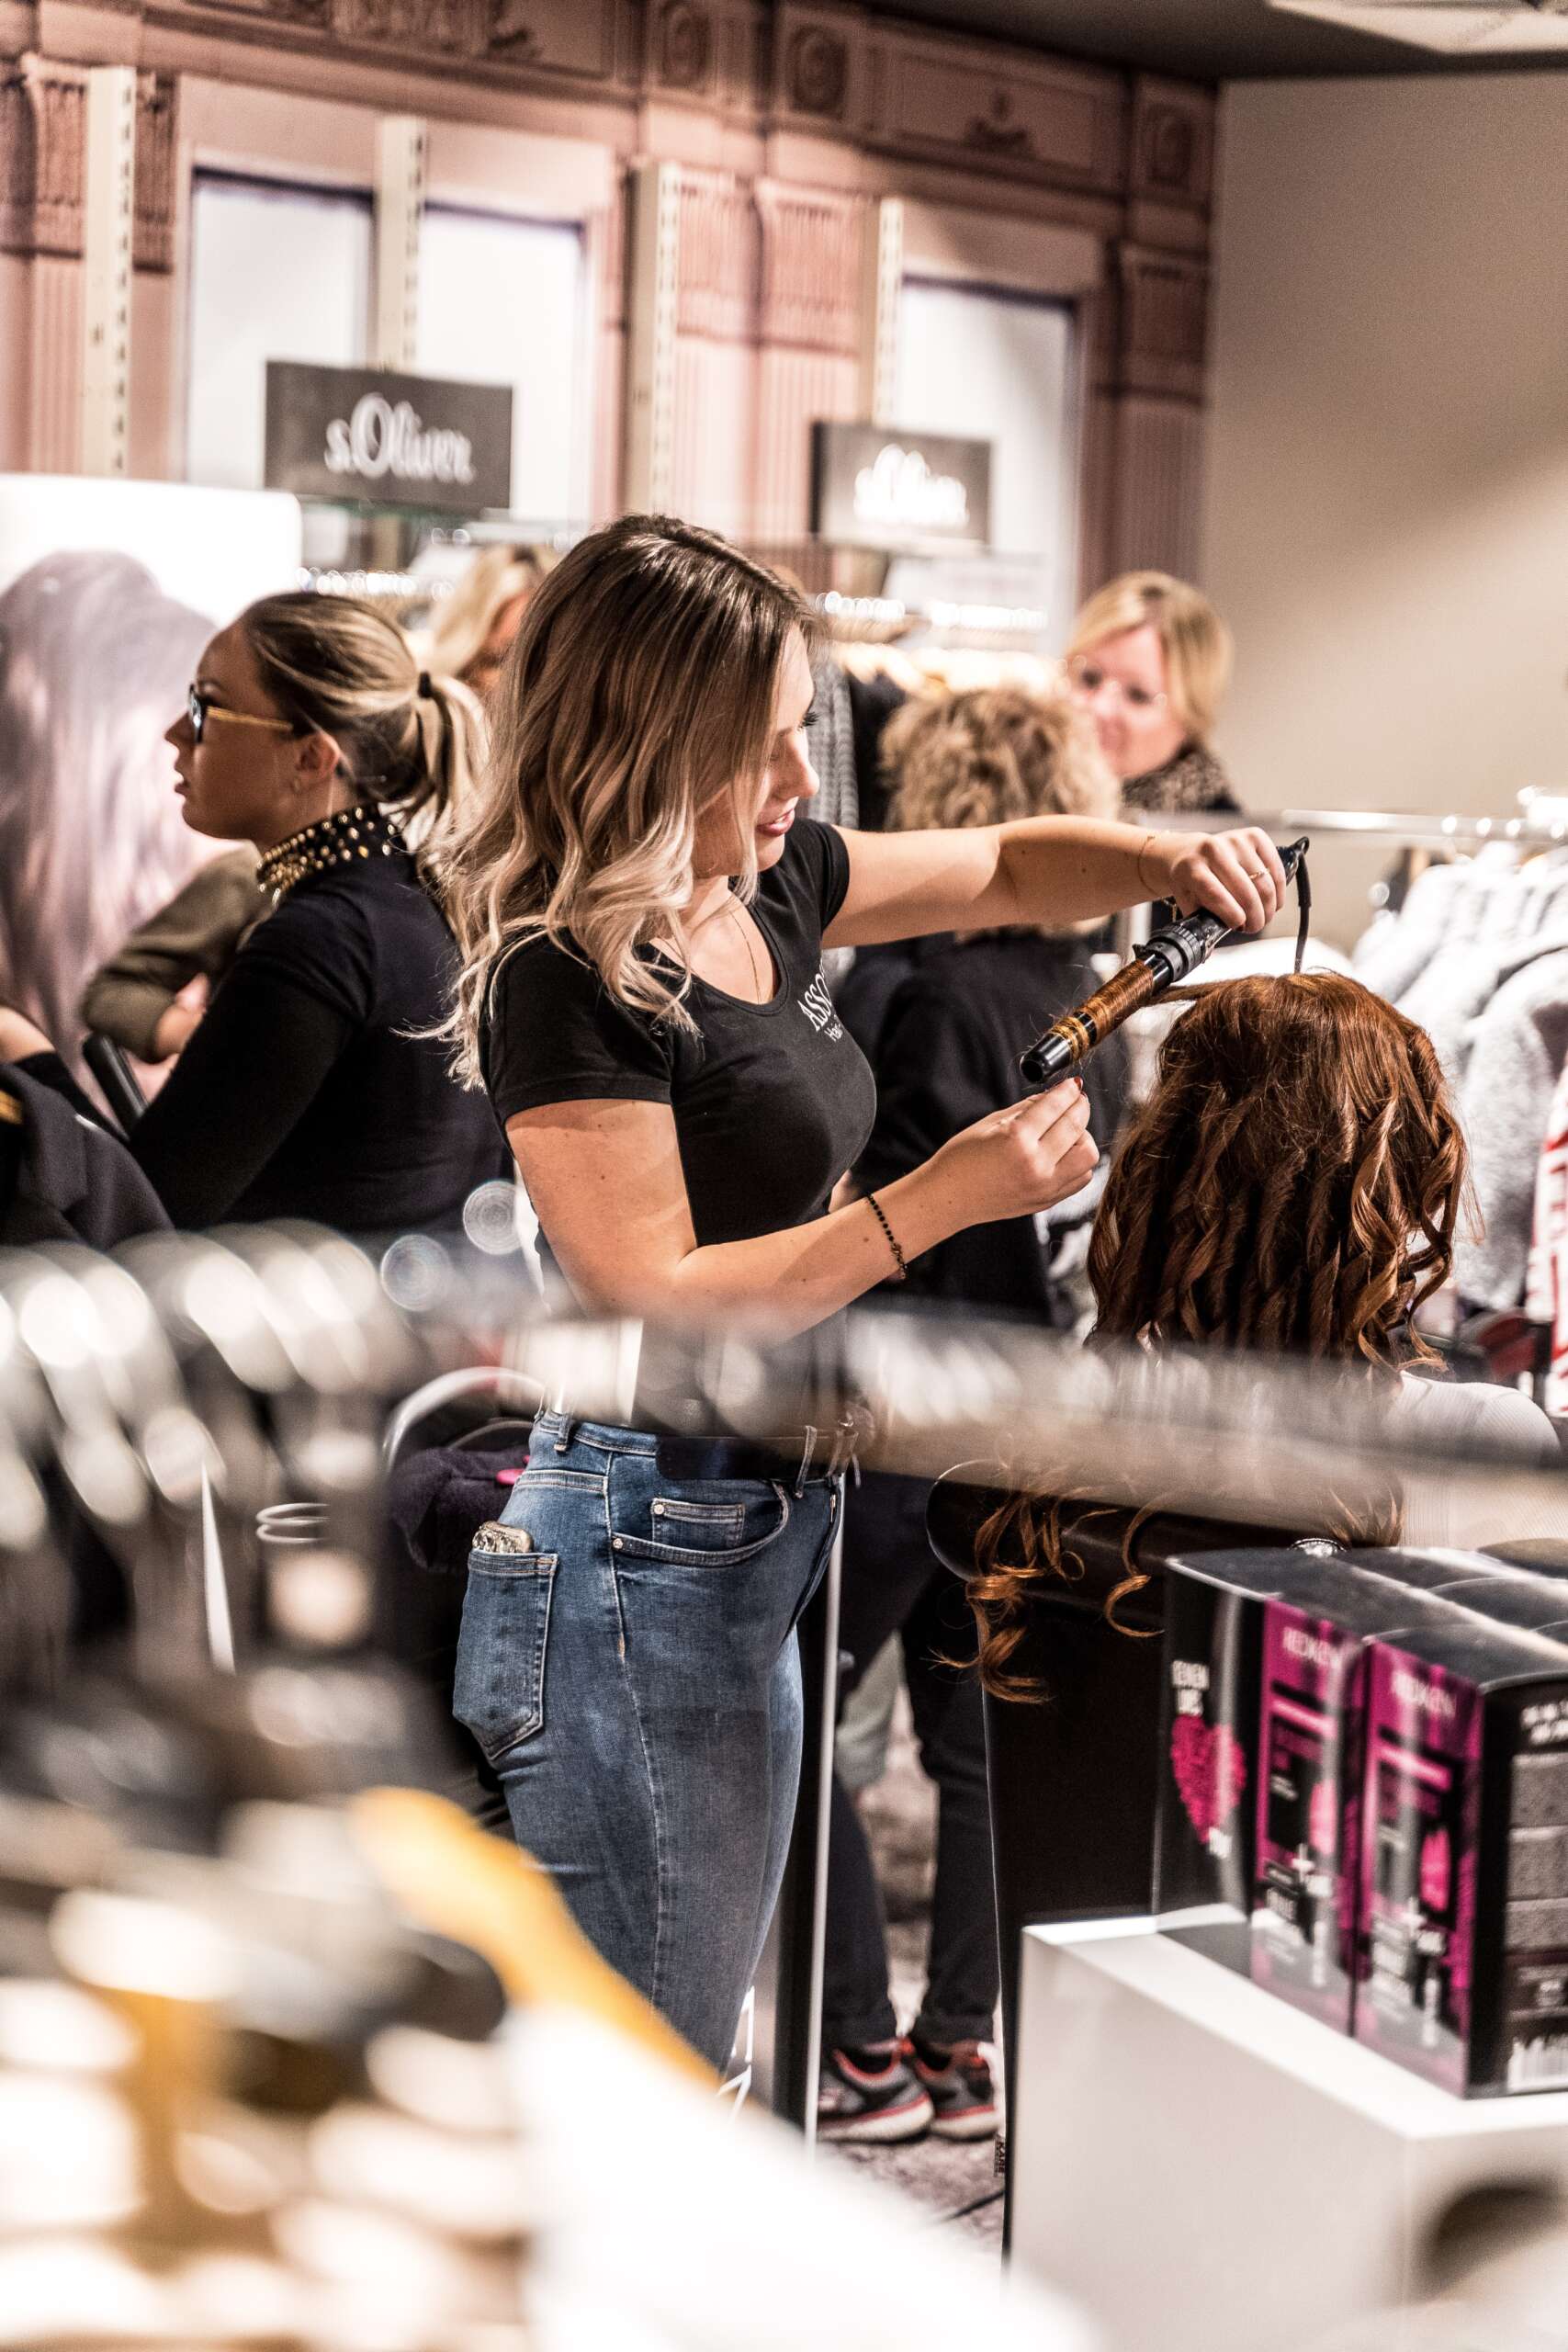 Woman Cutting hair, Hair Salon is using is iPos Retail POS